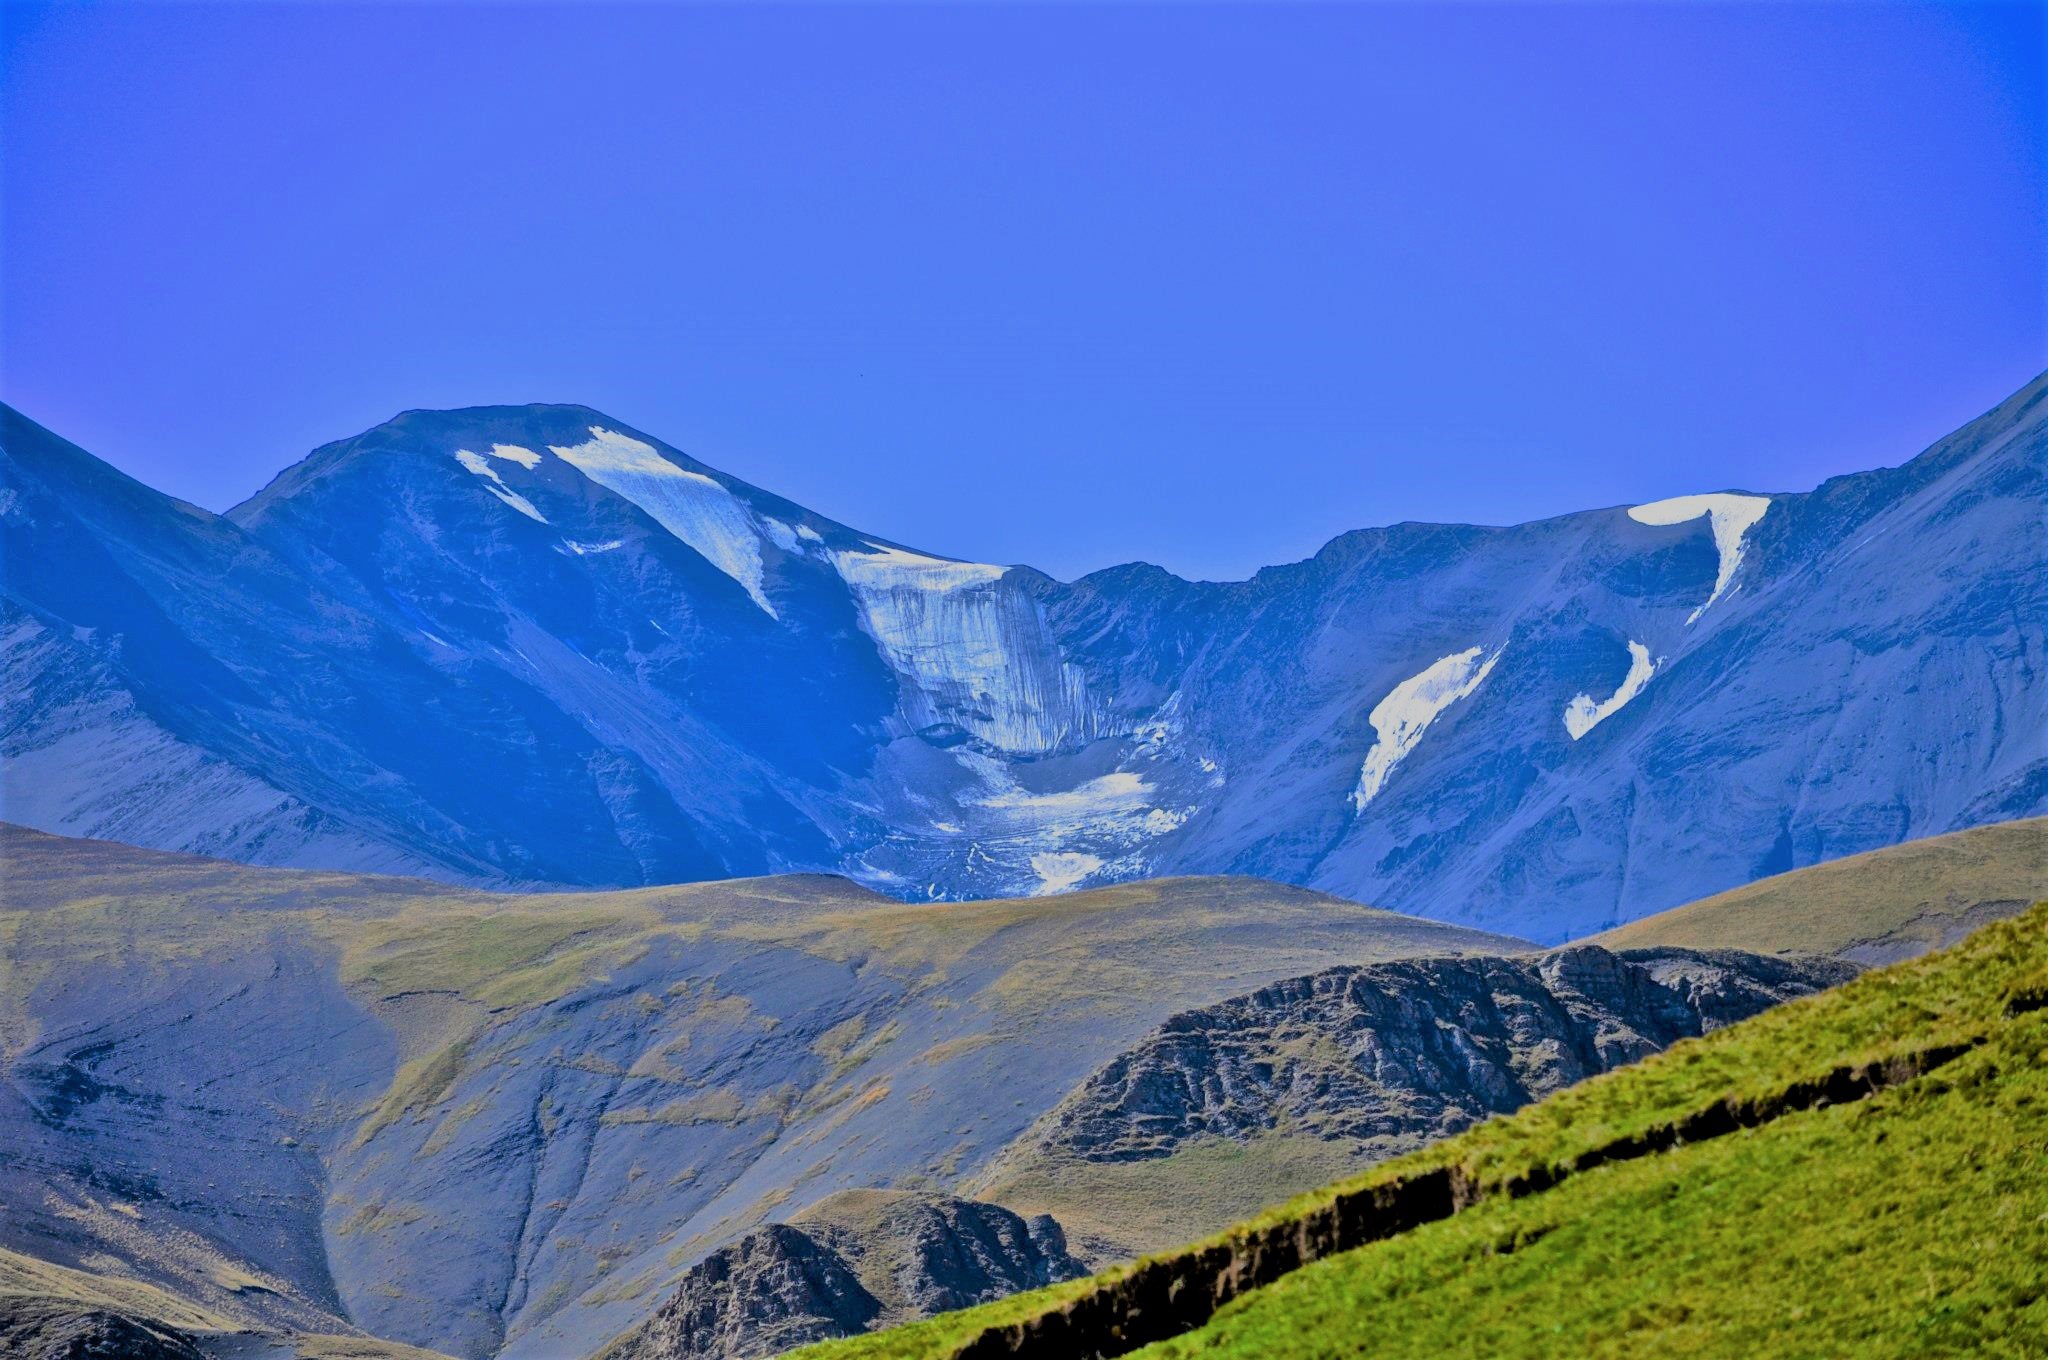 Гора Базардюзю